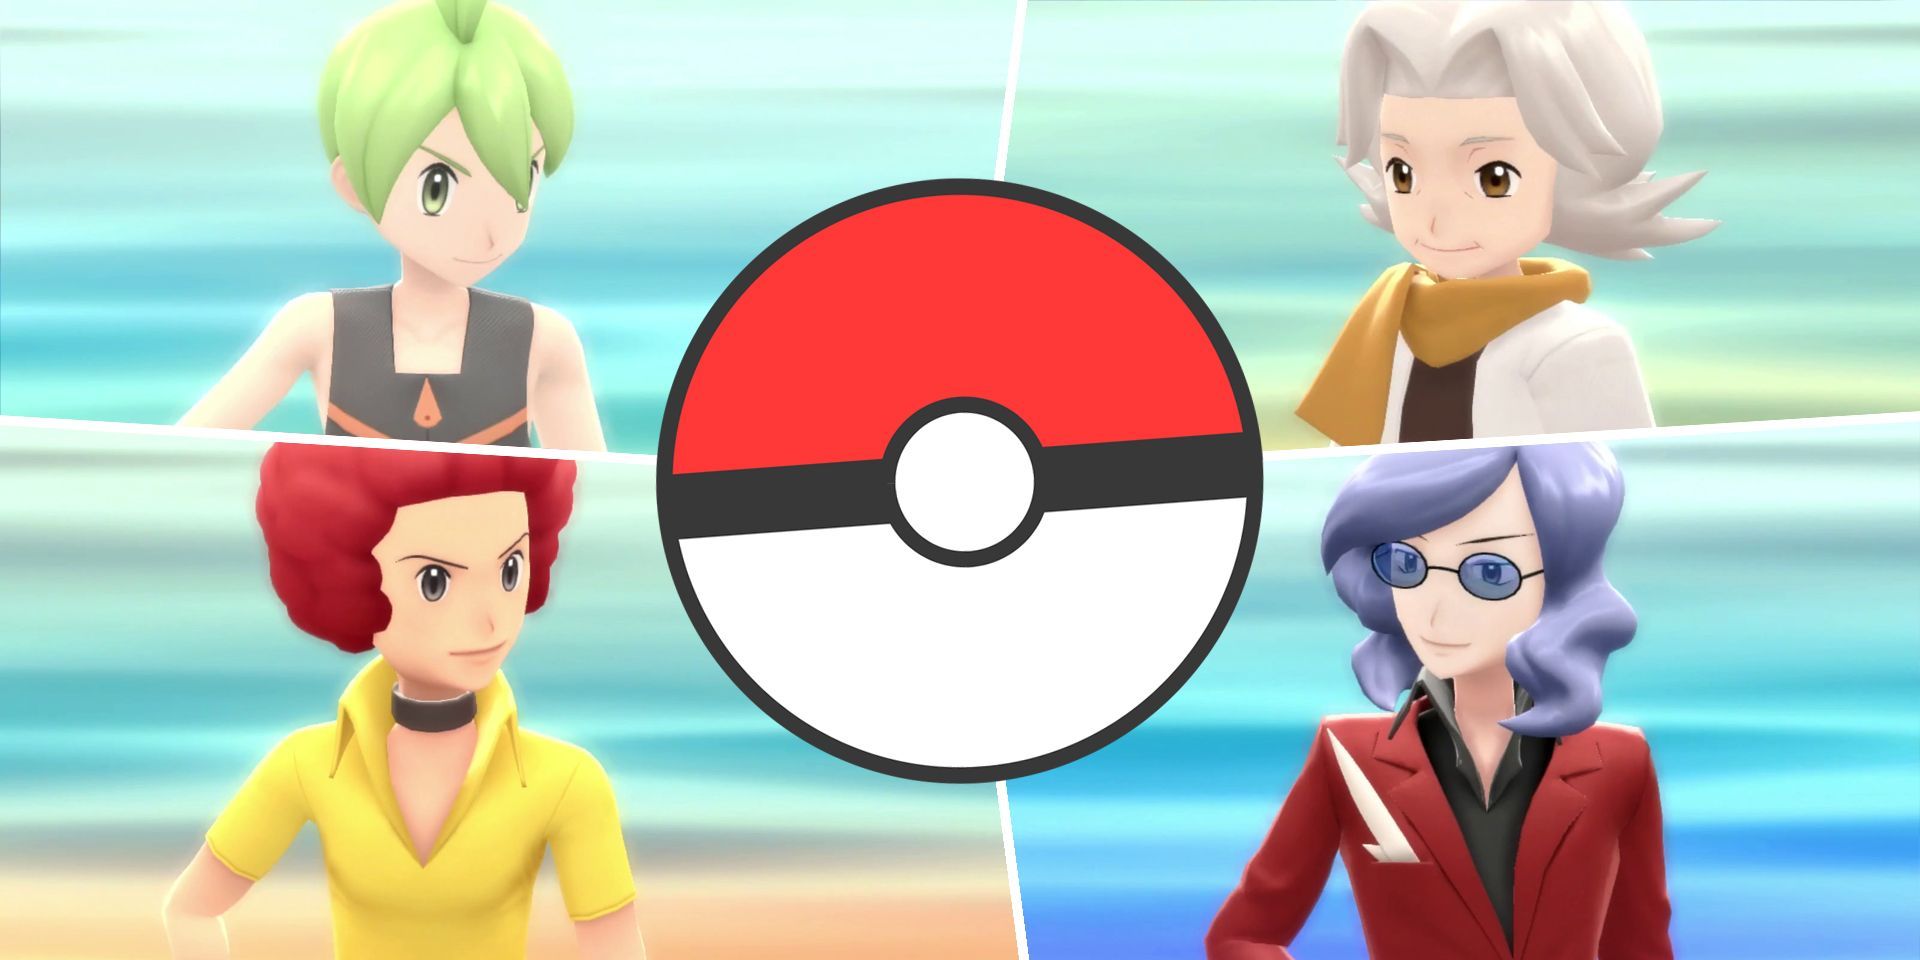 The Sinnoh Elite Four as seen in Pokémon BDSP with a poké ball in the center.